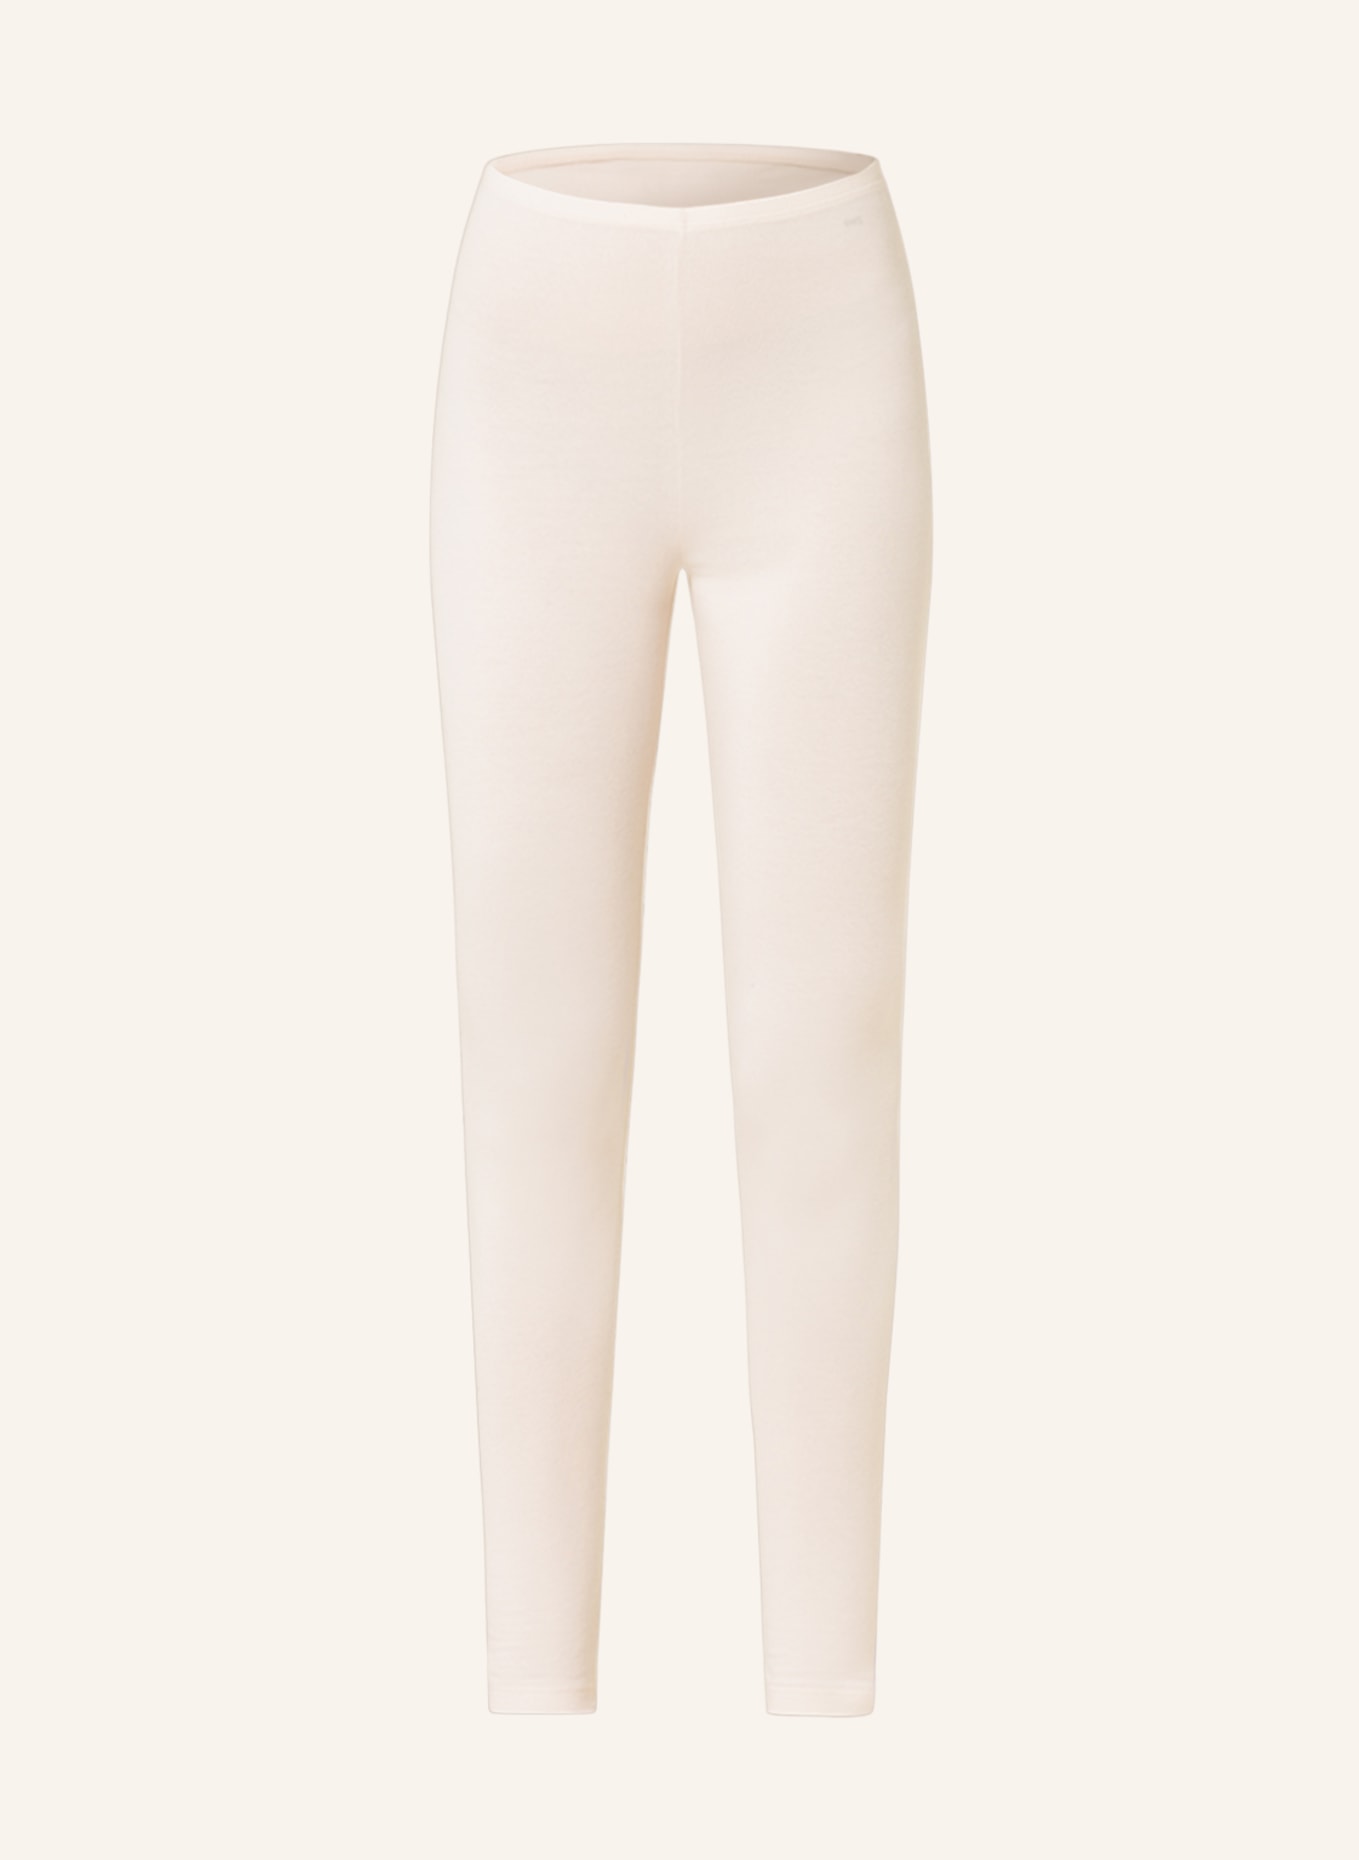 JOY LAB Womens Cream Textured Seamlessly Knit Comfort Stretch Leggings sz  XS NWT | eBay